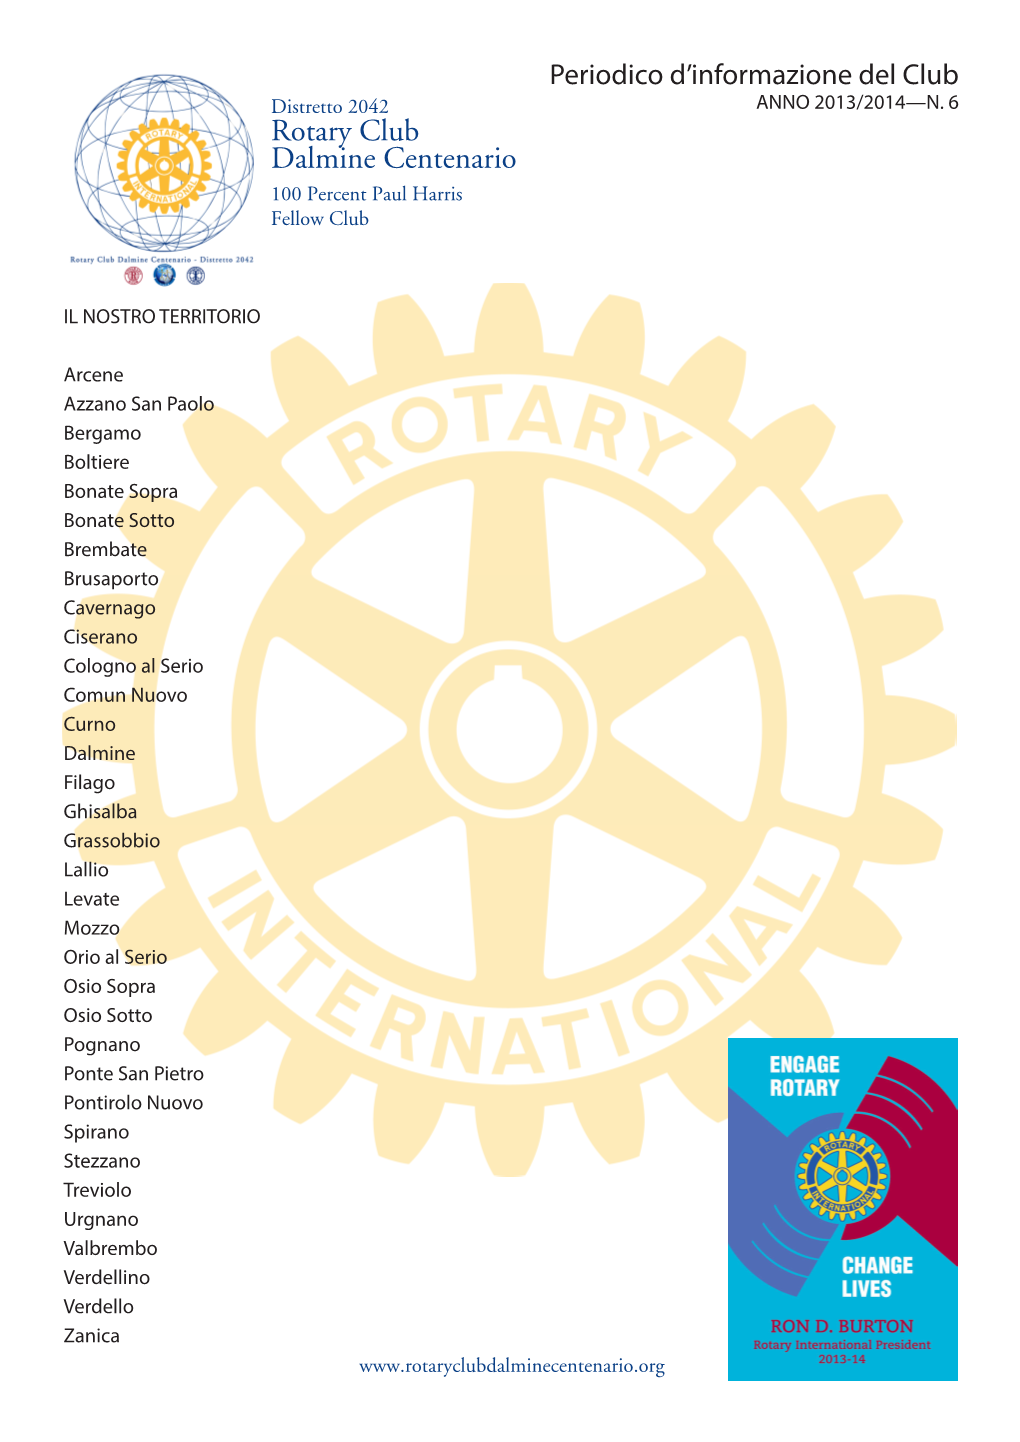 N. 6 Rotary Club Dalmine Centenario 100 Percent Paul Harris Fellow Club